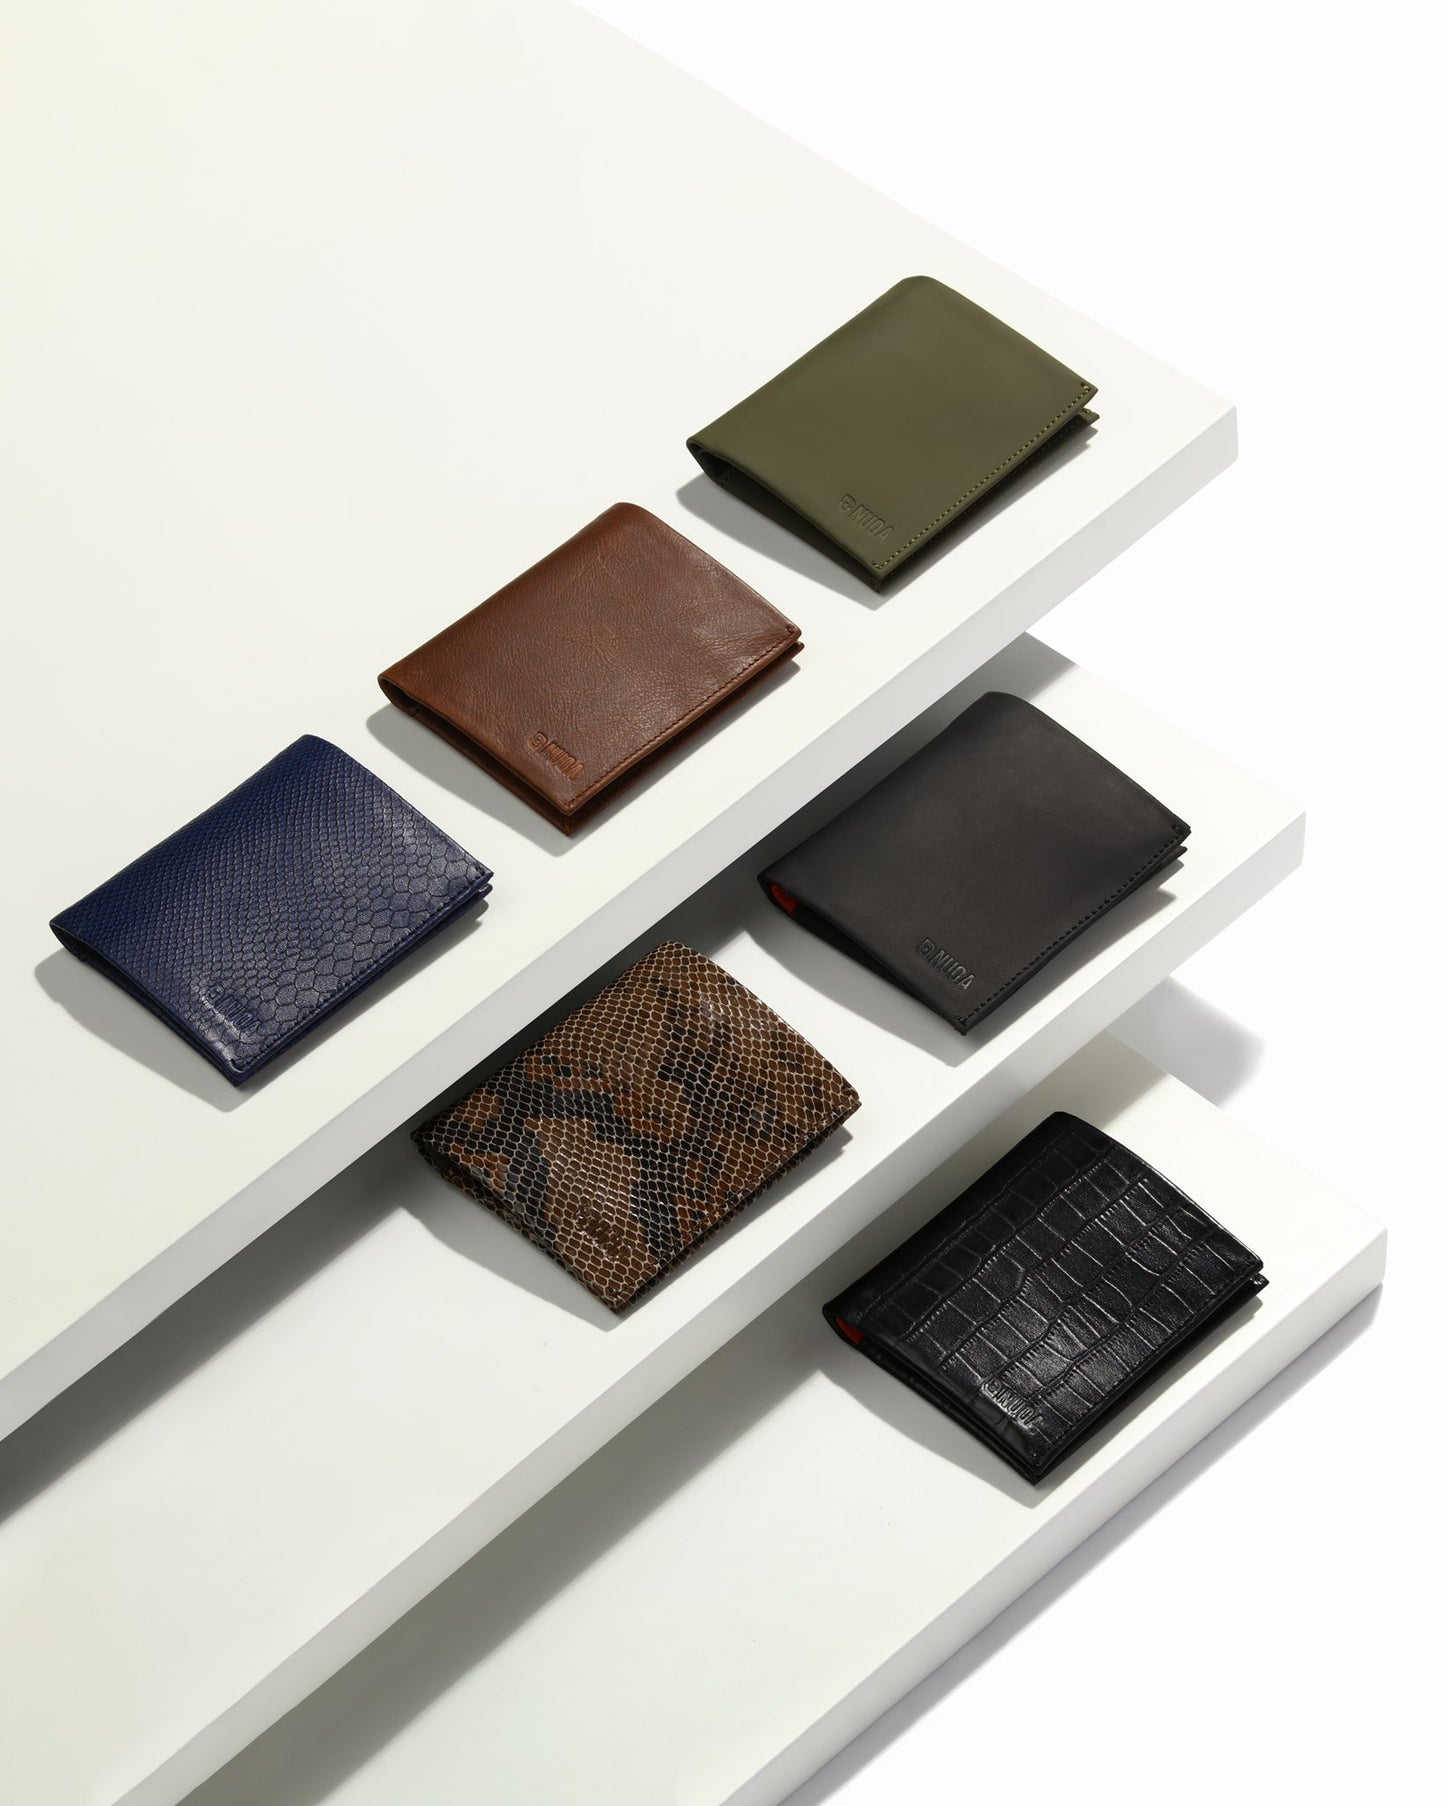 Slim Leather Wallet - Negro Cocodrilo/Rojo